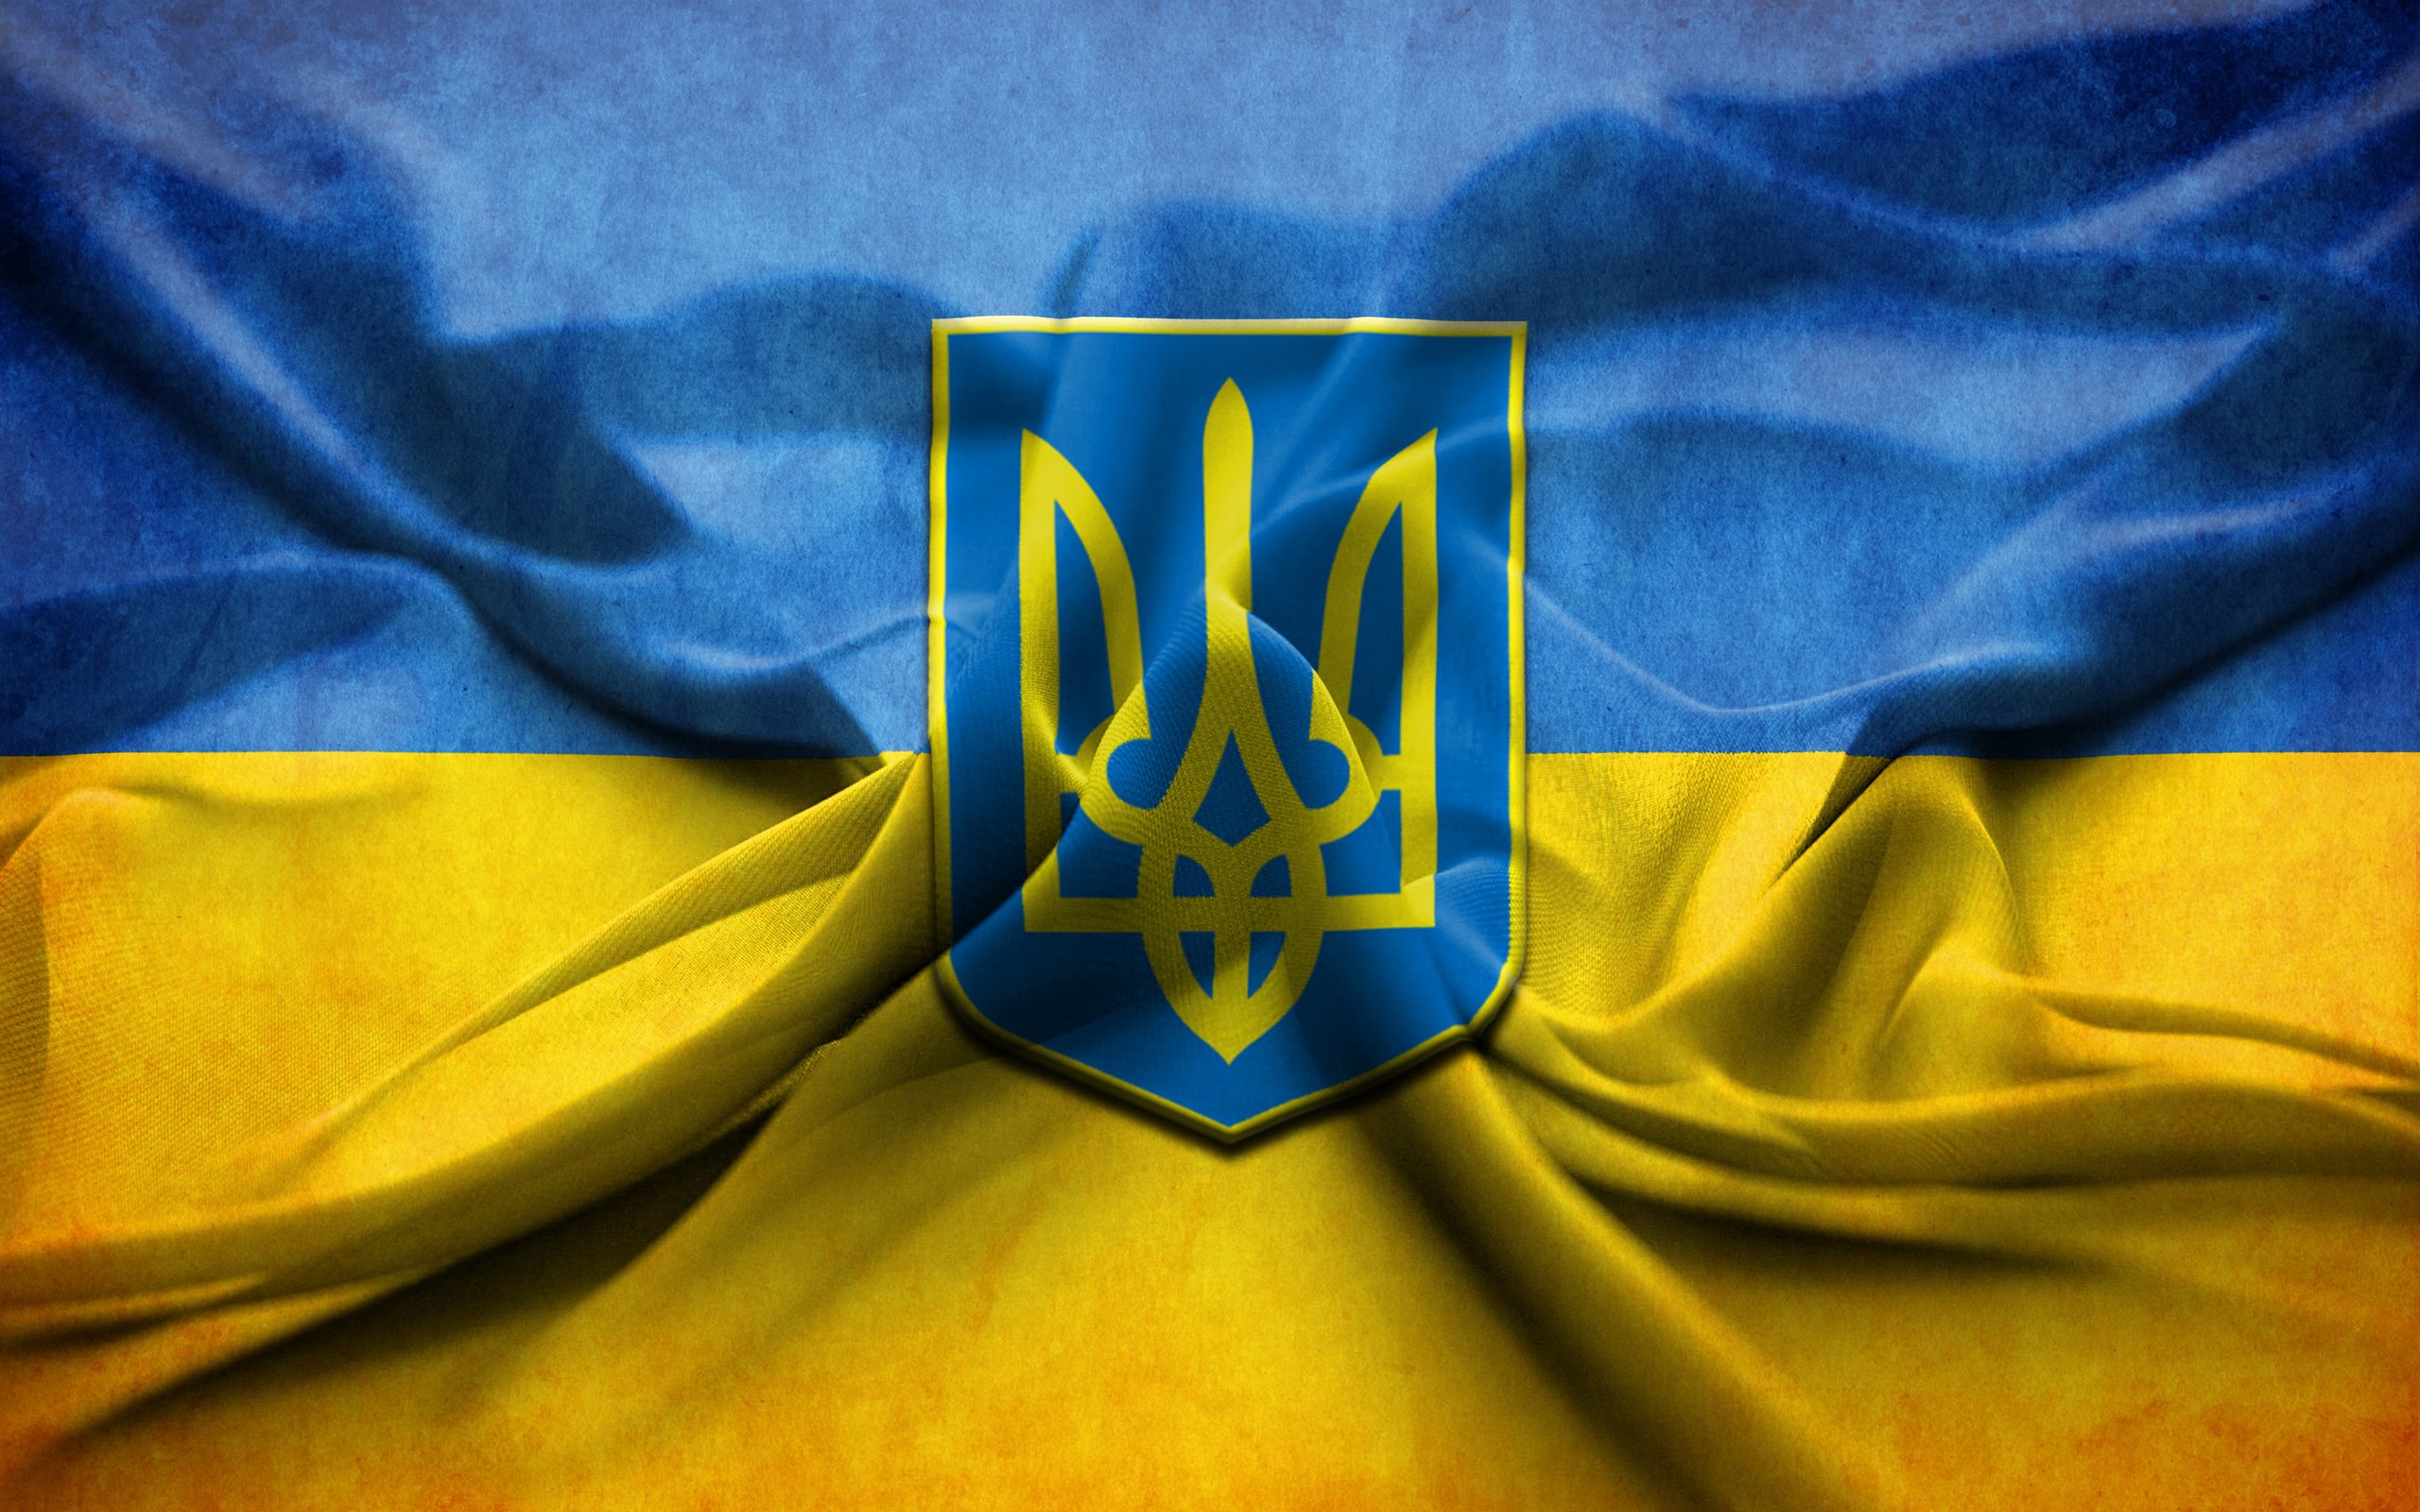 Ukraine Flag wallpapers hd wallpapers55com   Best Wallpapers for